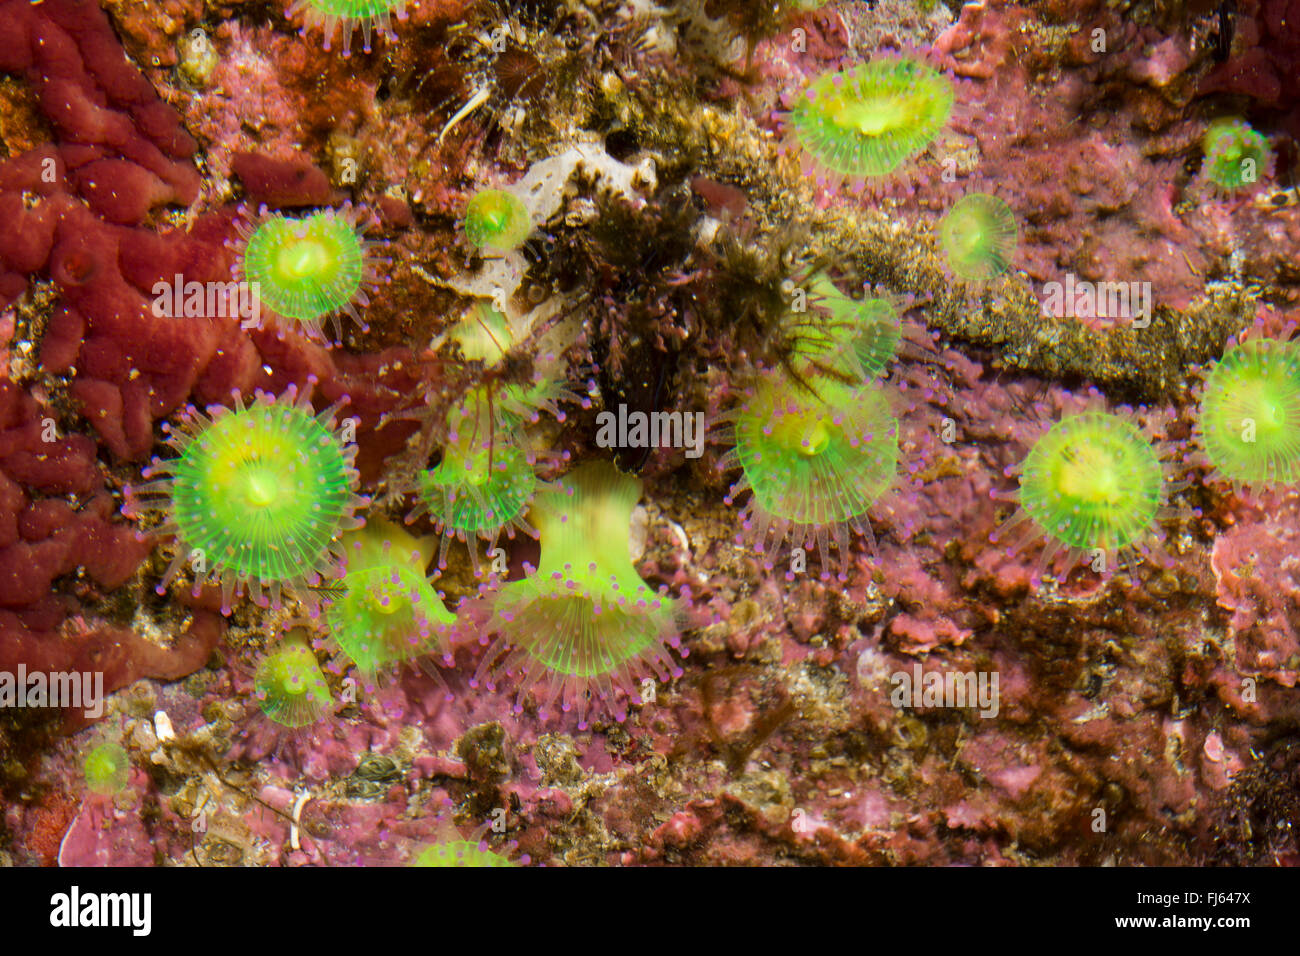 Green jewel anemone (Corynactis viridis), colony on a stone Stock Photo